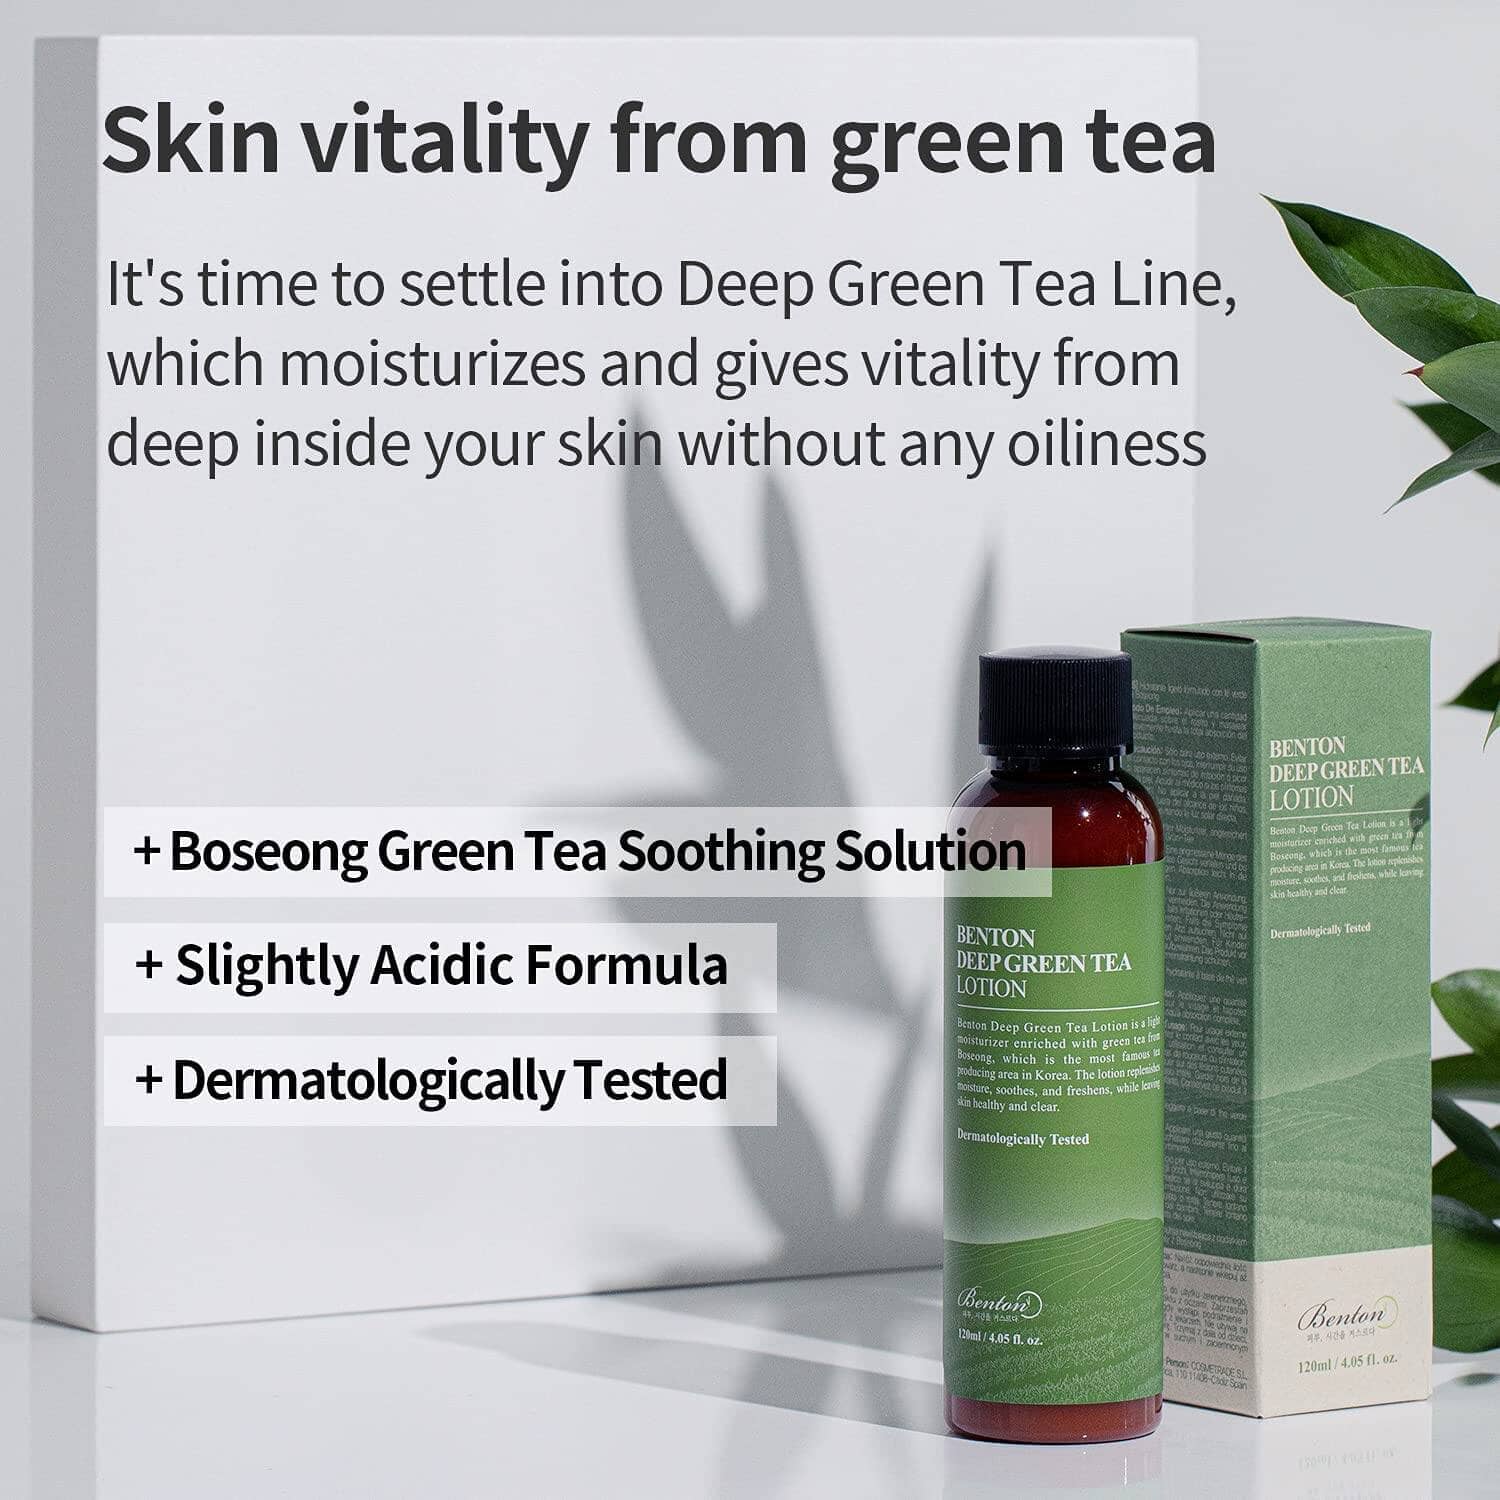 *** SALE *** Benton Deep Green Tea Lotion 120ml ***EXP ON 2025-01-04*** Skin Care Benton ORION XO Sri Lanka